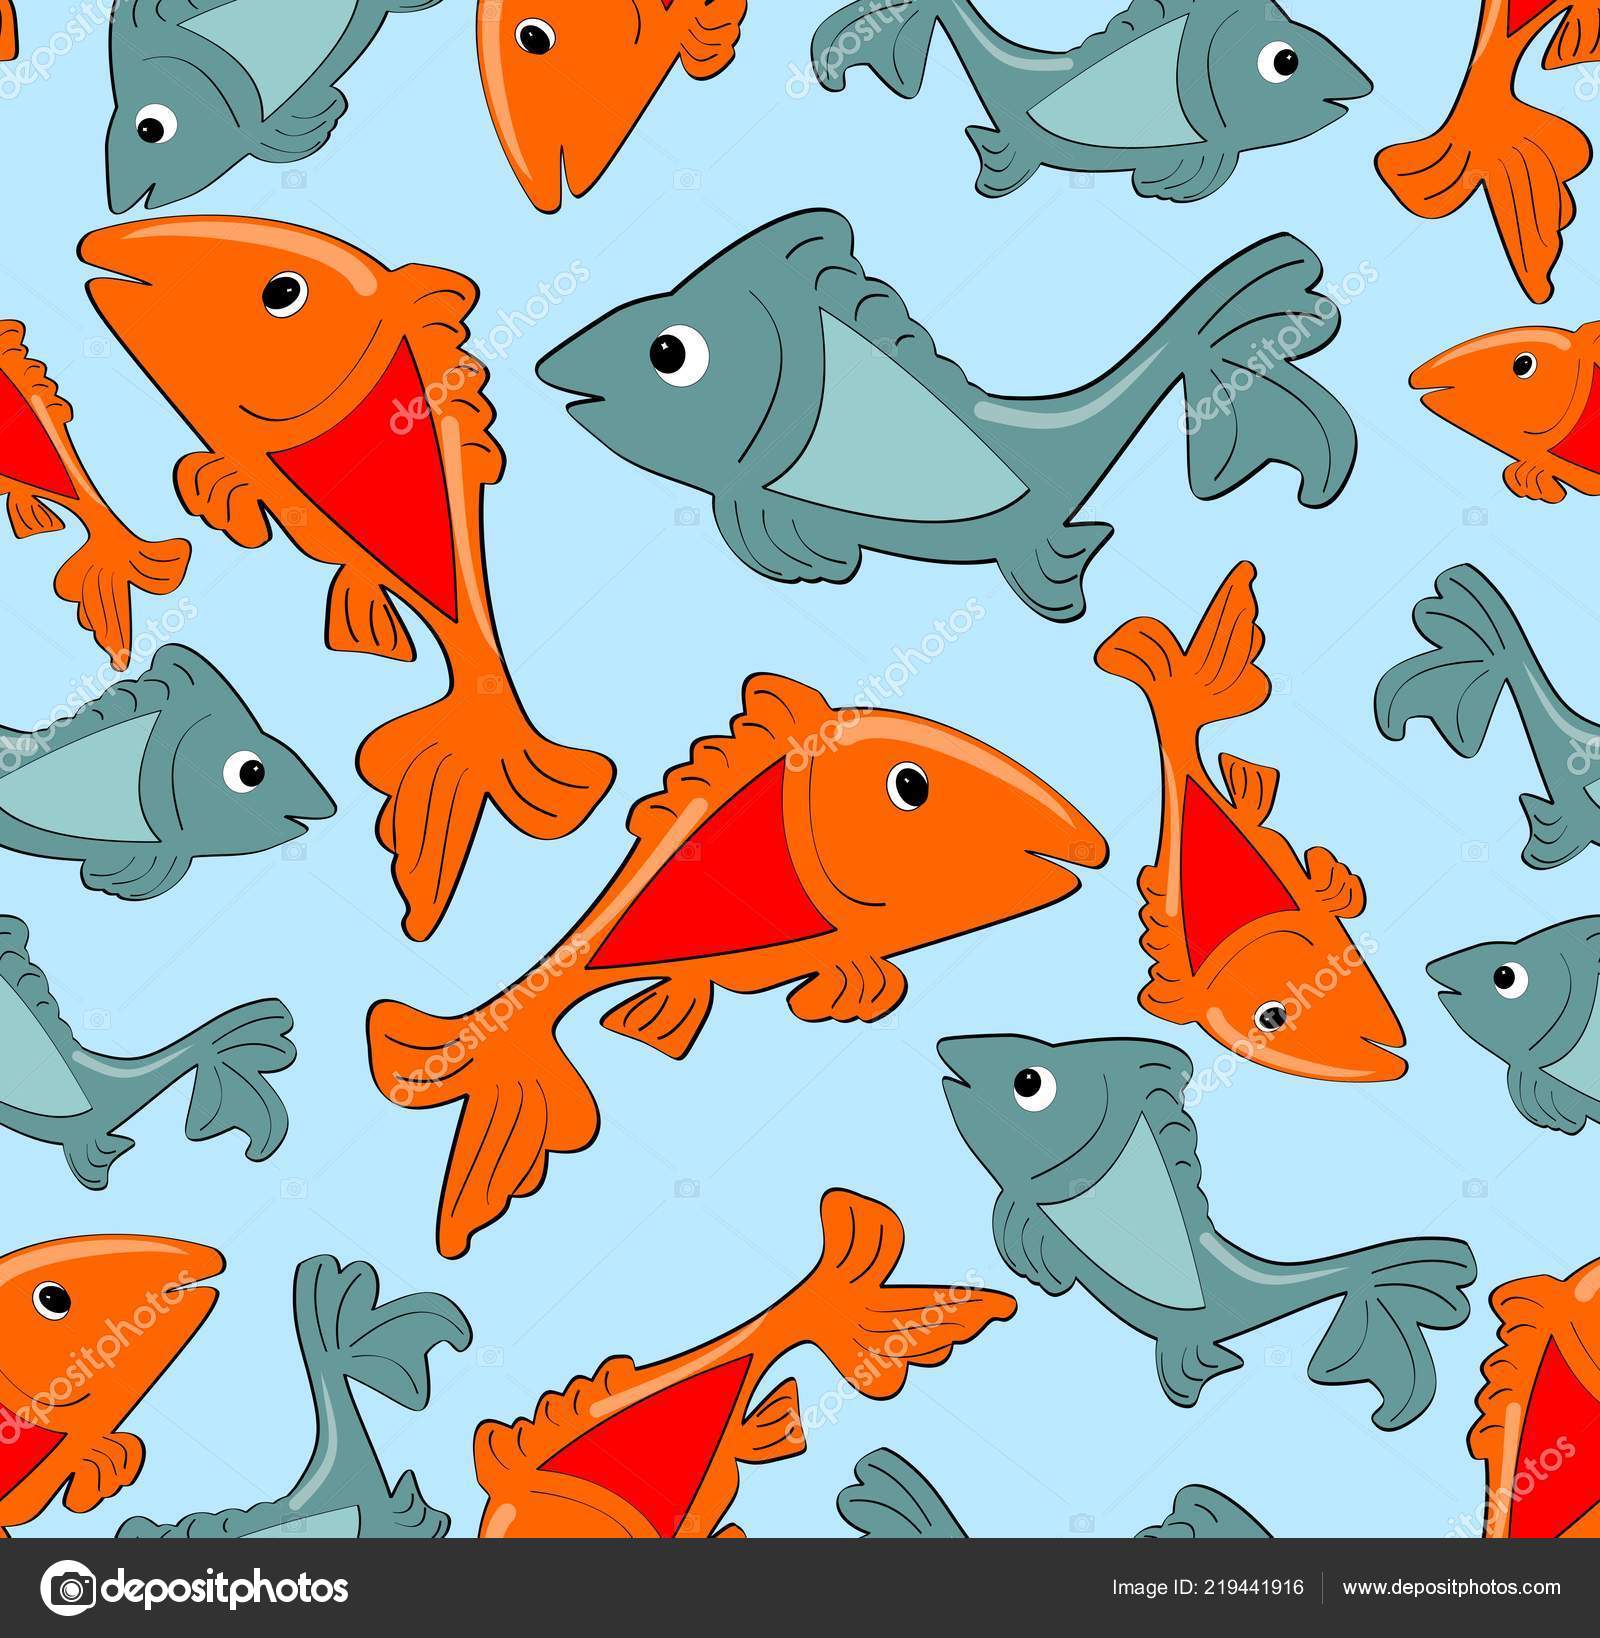 Fish Cartoon Patterns - HD Wallpaper 